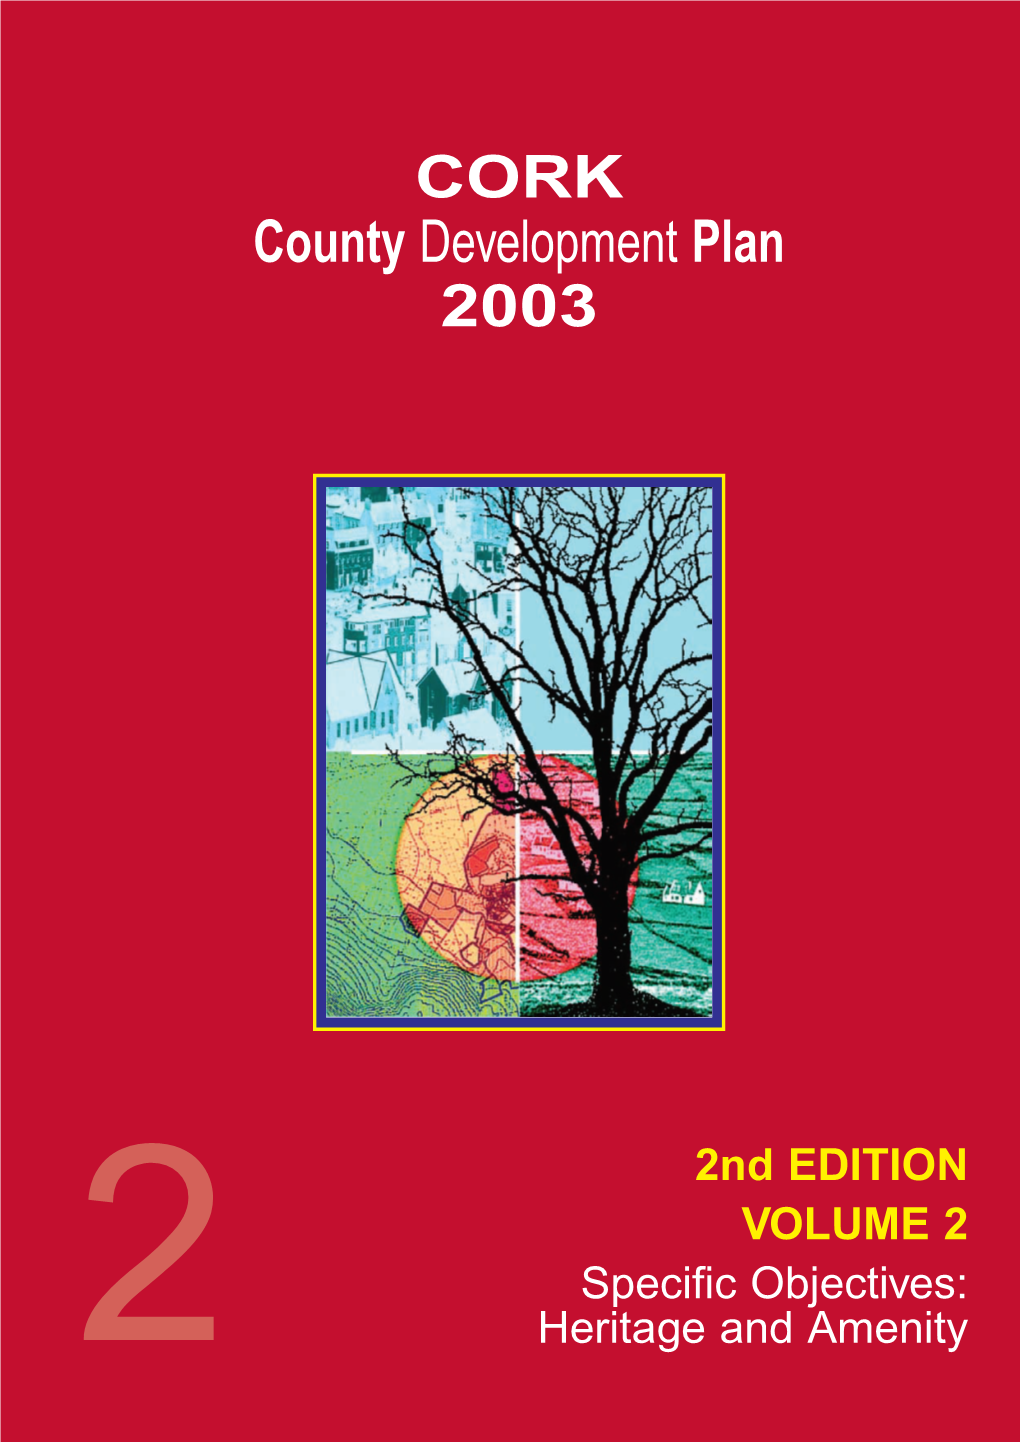 CORK County Development Plan 2003